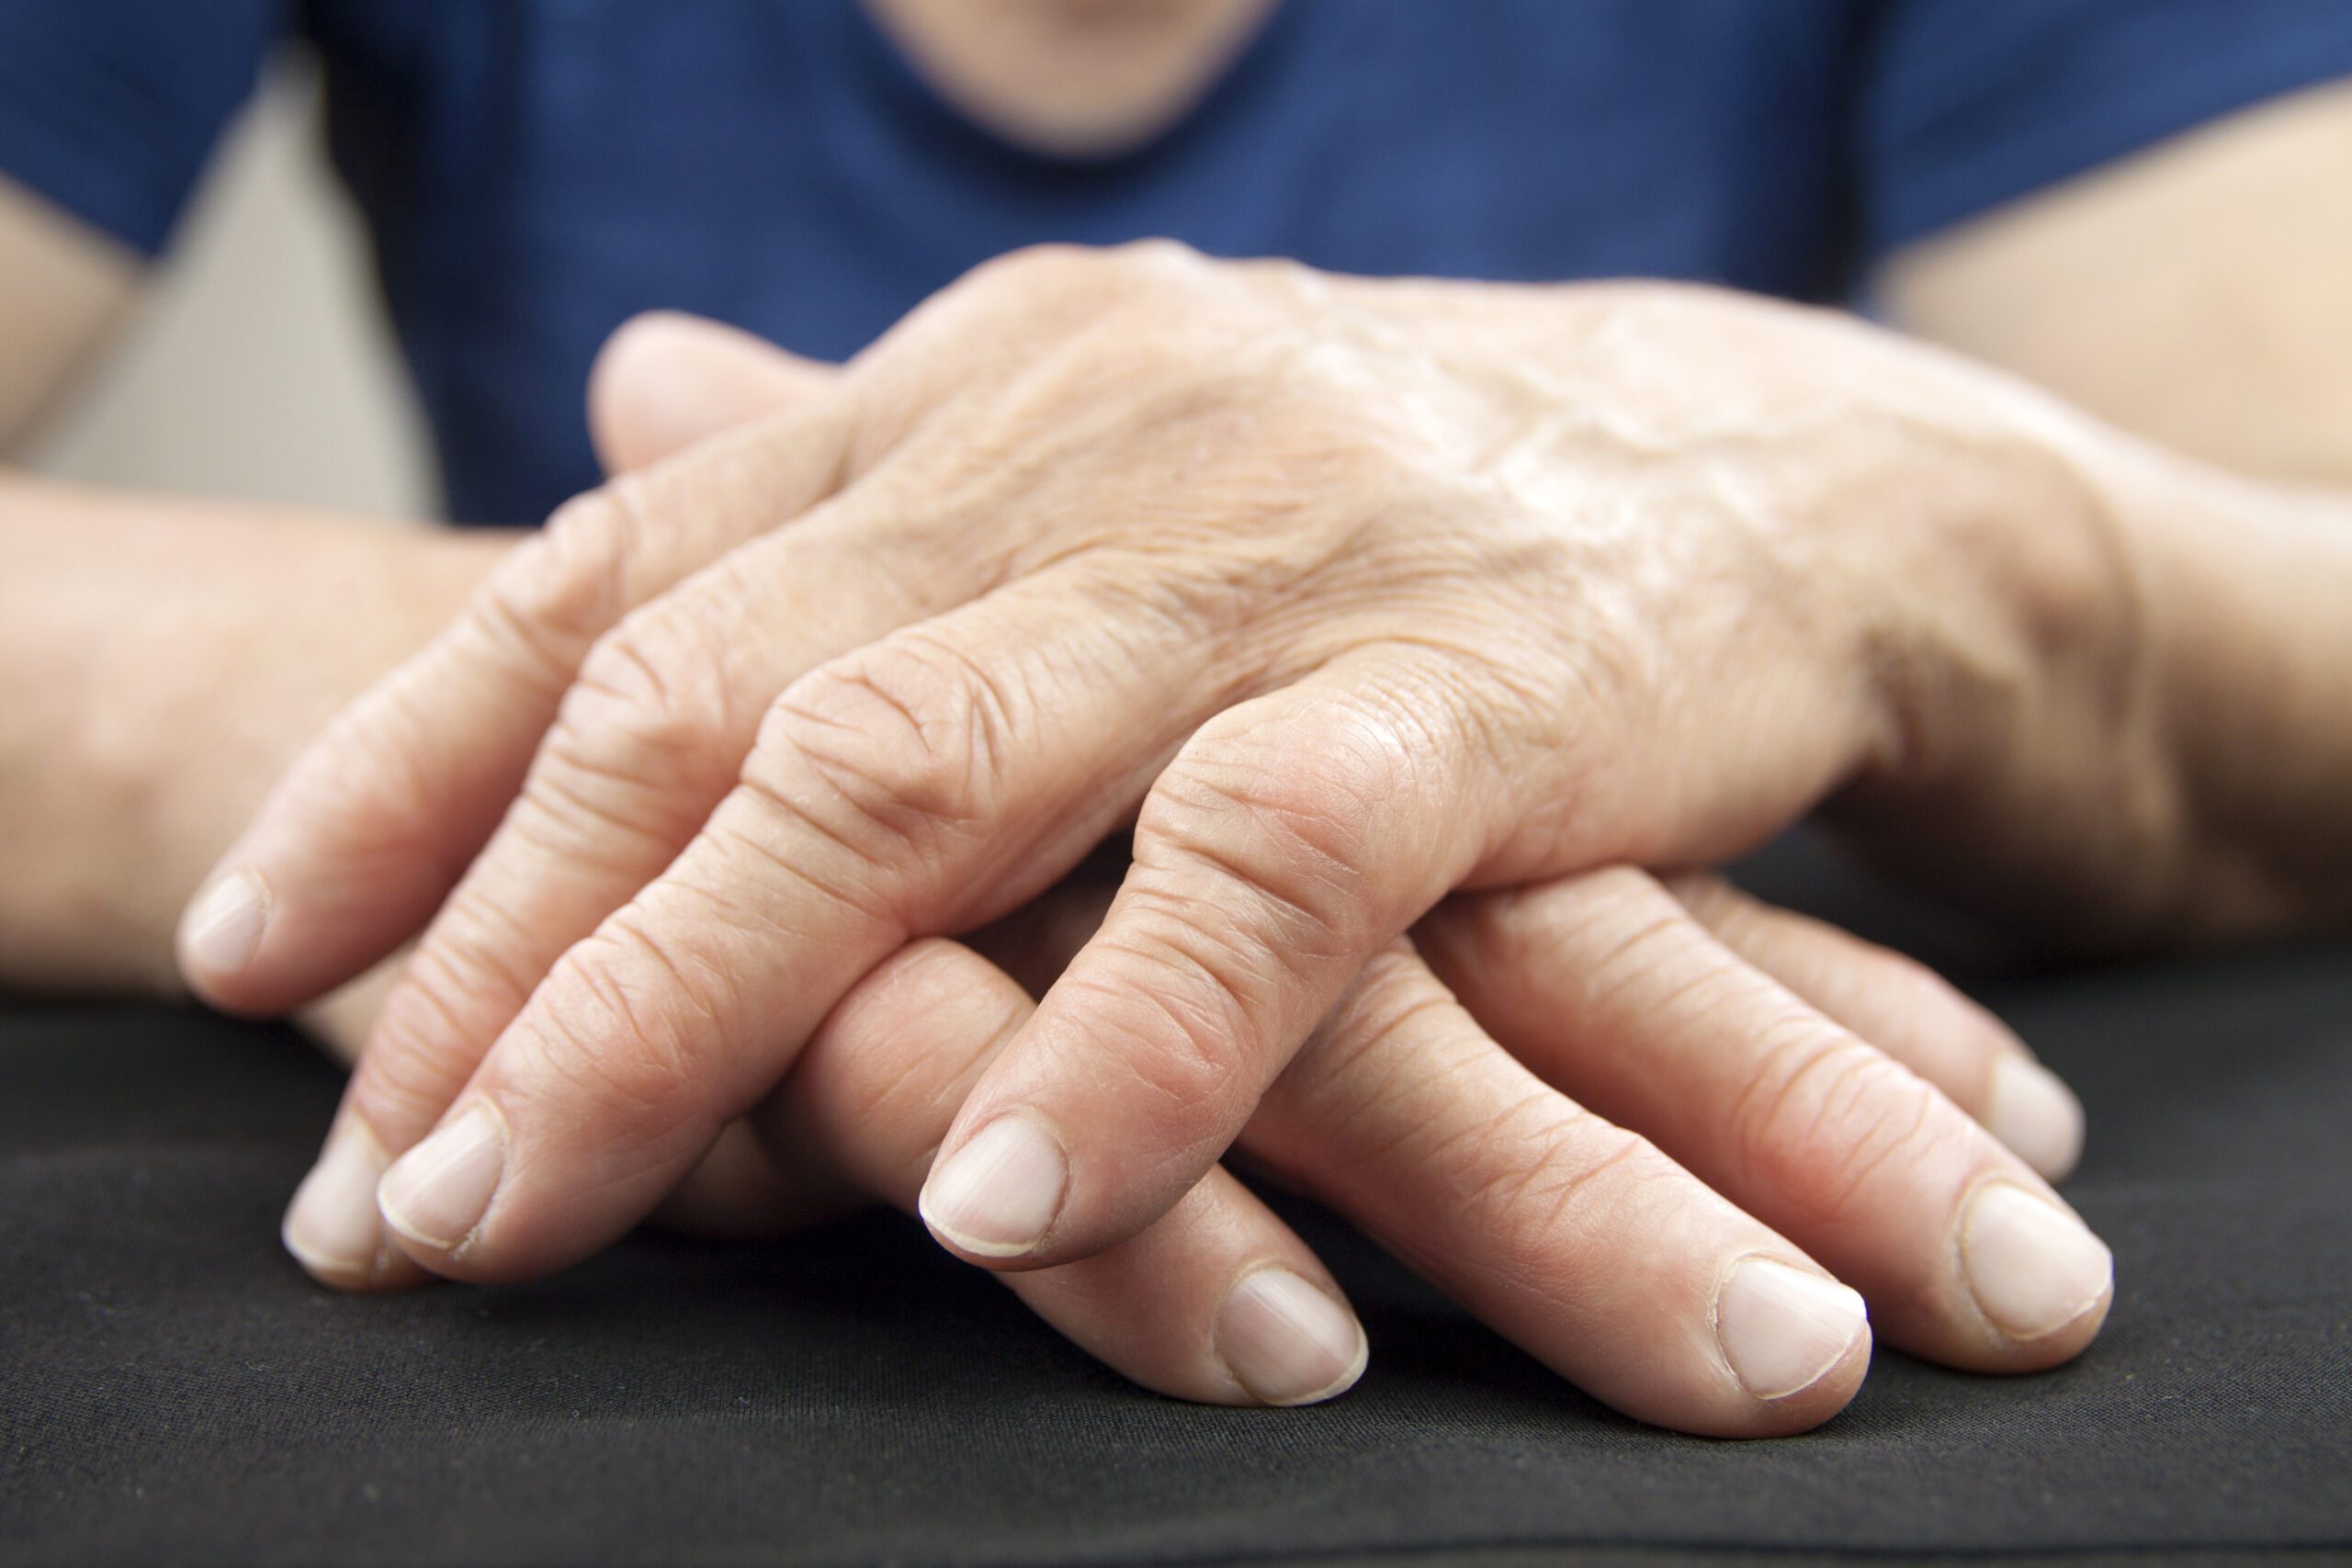 Patient with deformed hands from rheumatoid arthritis before hand arthritis surgery